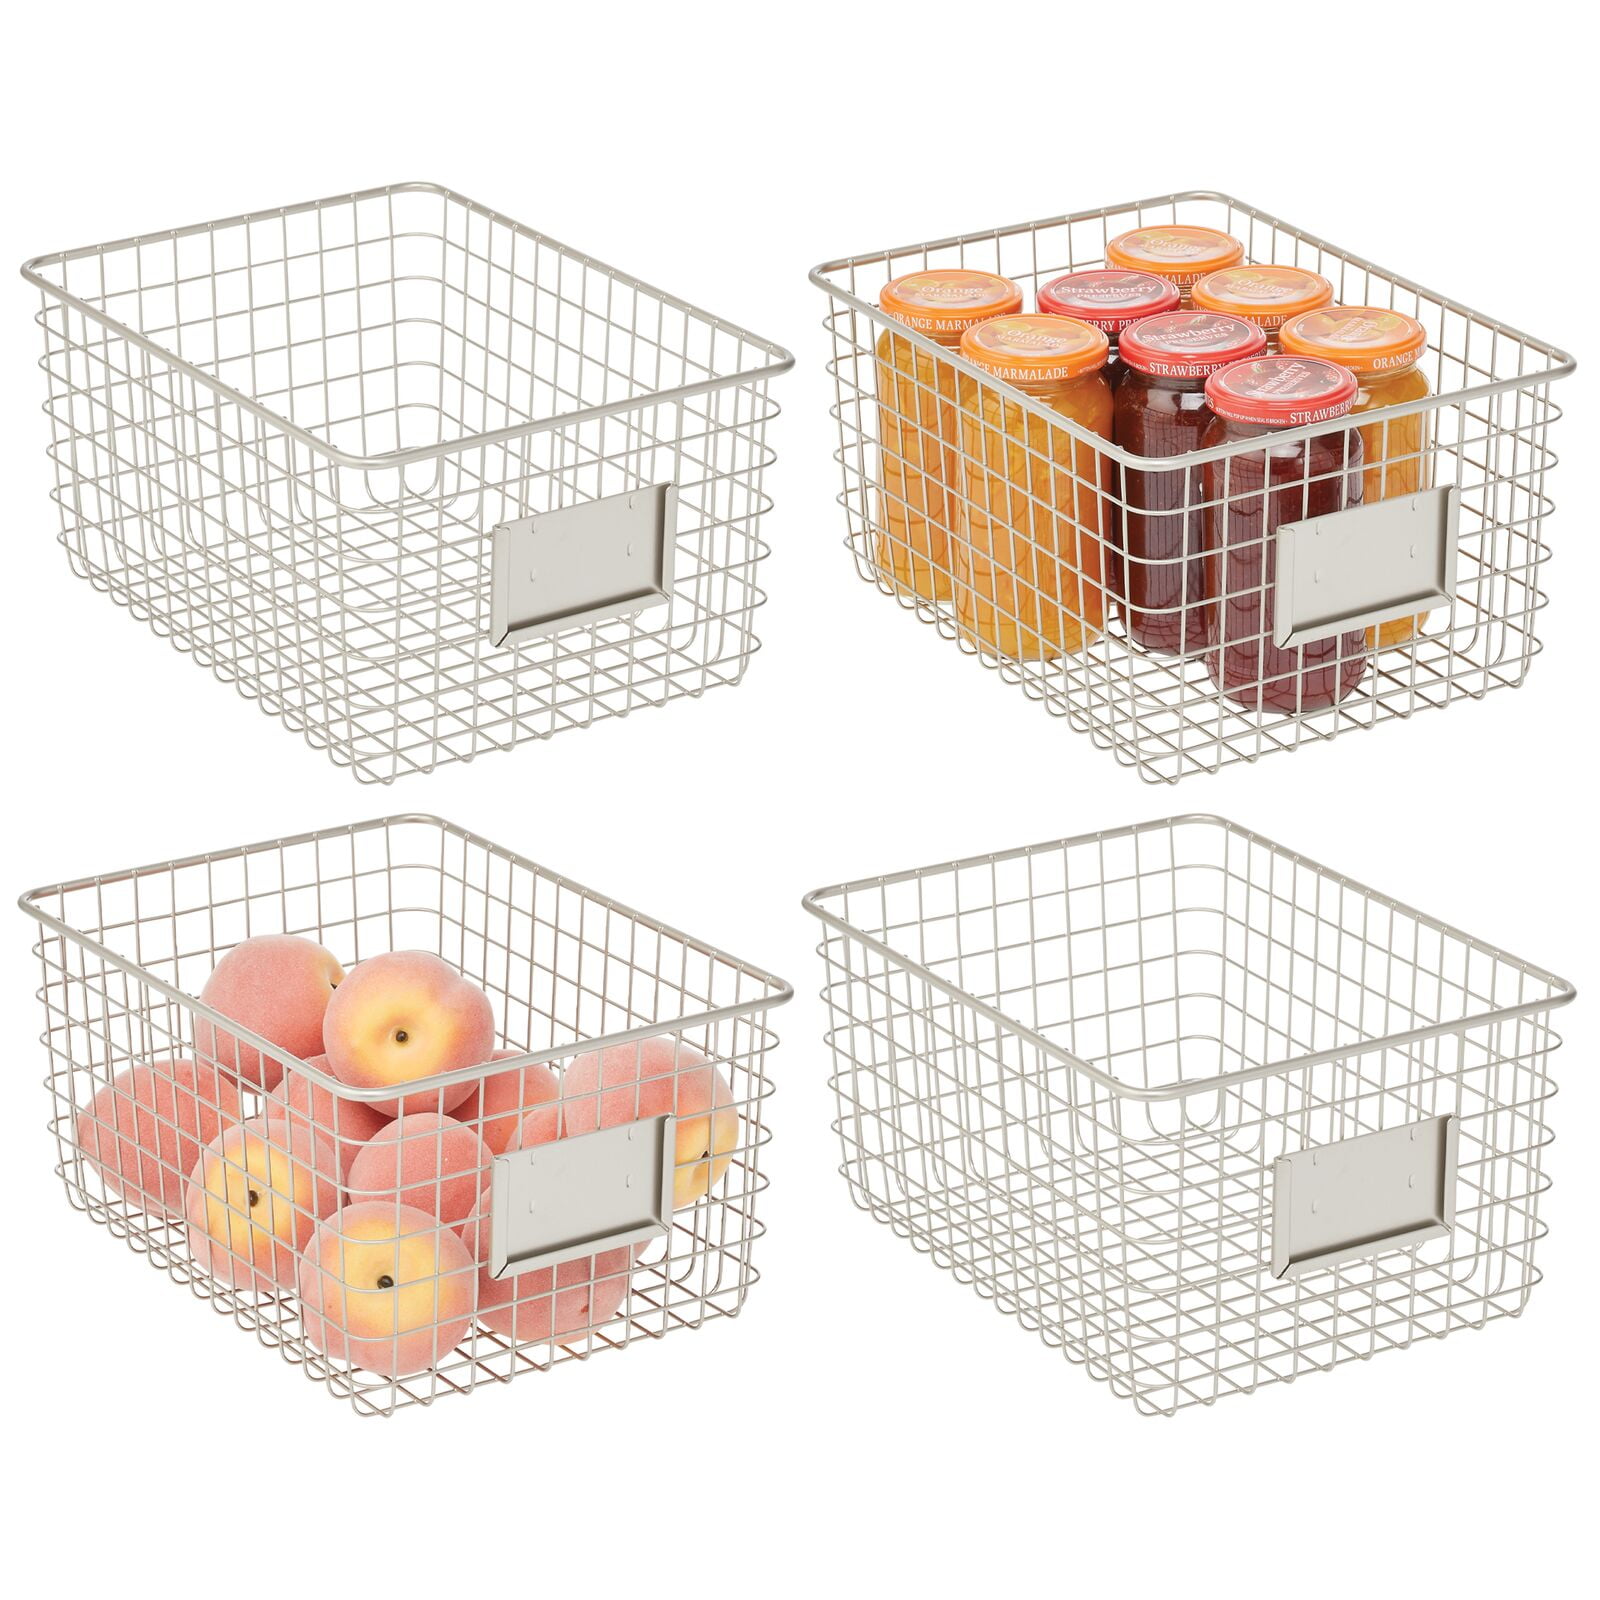 4ct mDesign Wide Steel Kitchen Organizer Basket Label Slot, 4 Pack, Matte Black